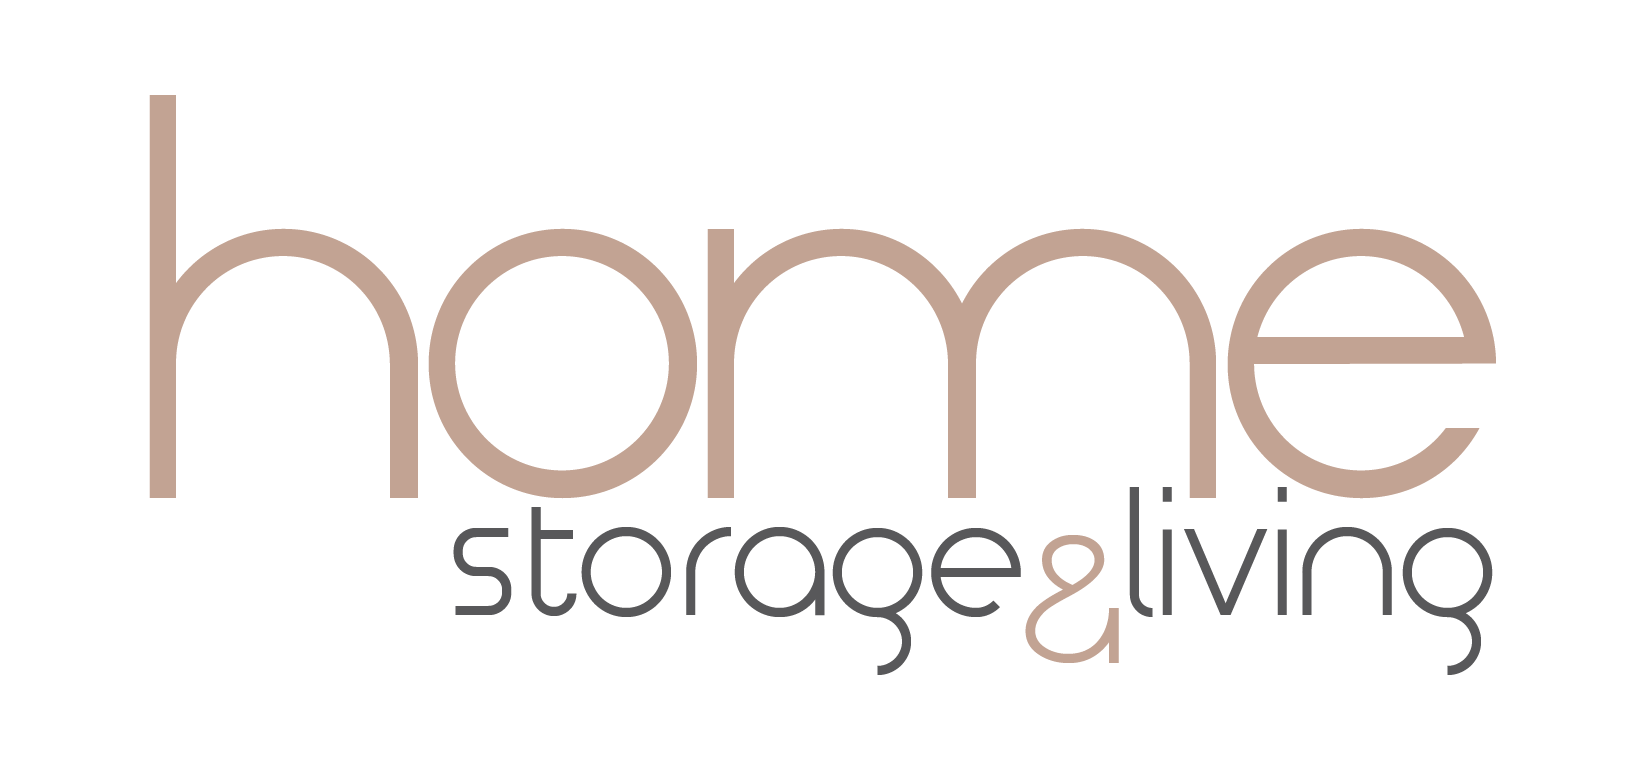 Home Storage & Living